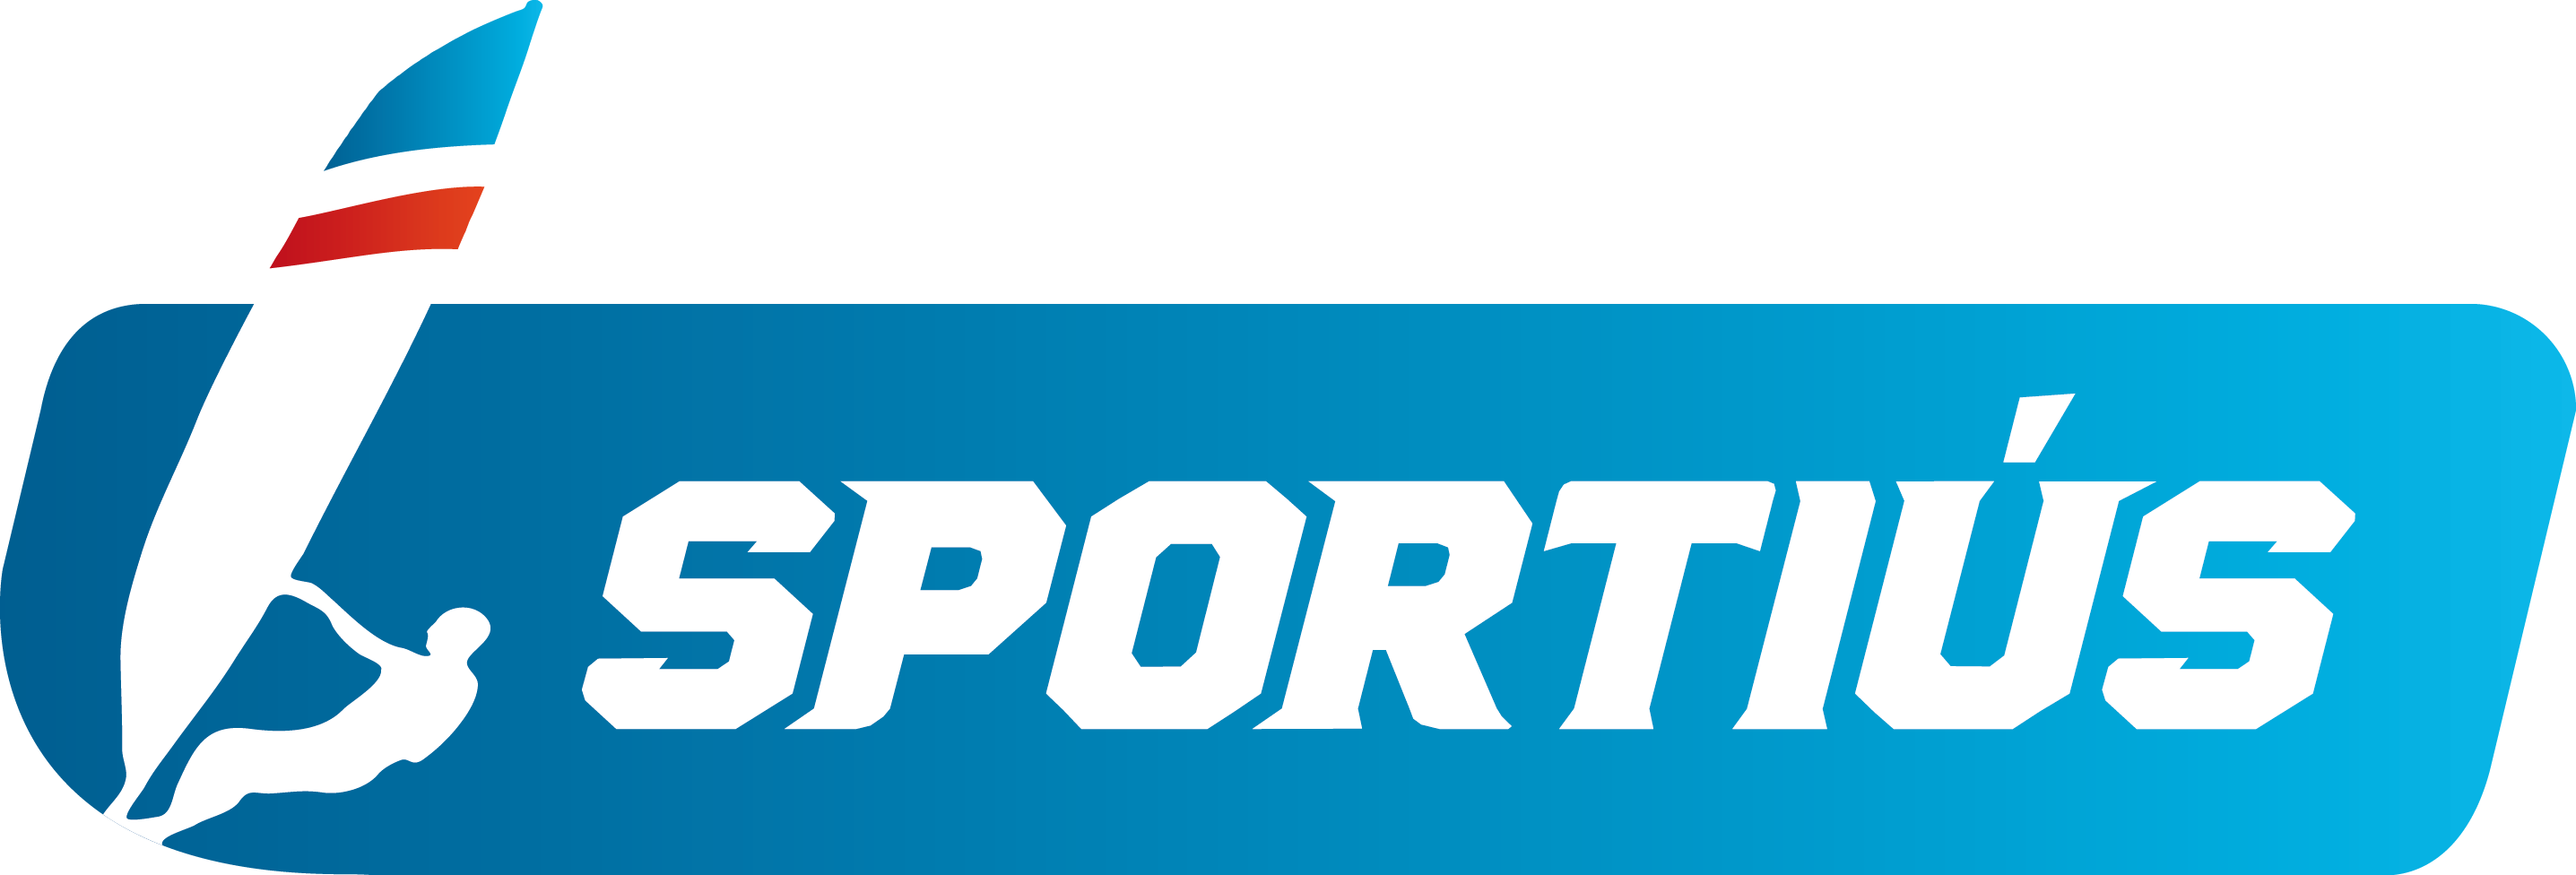 logo sportius png